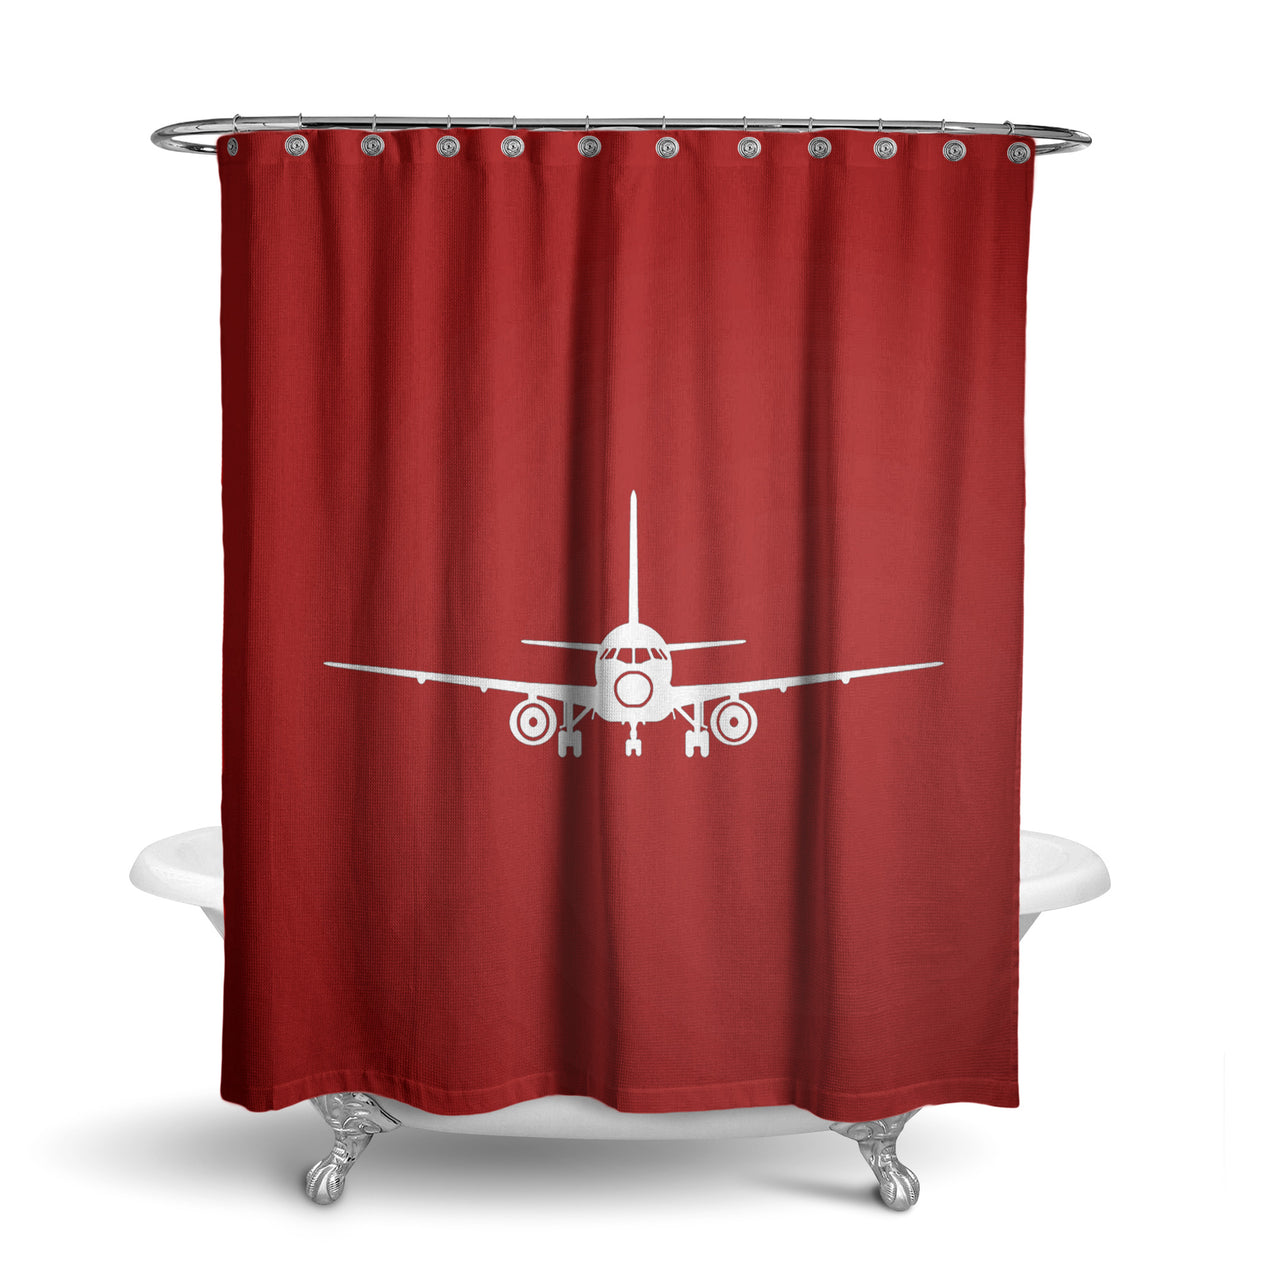 Sukhoi Superjet 100 Silhouette Designed Shower Curtains